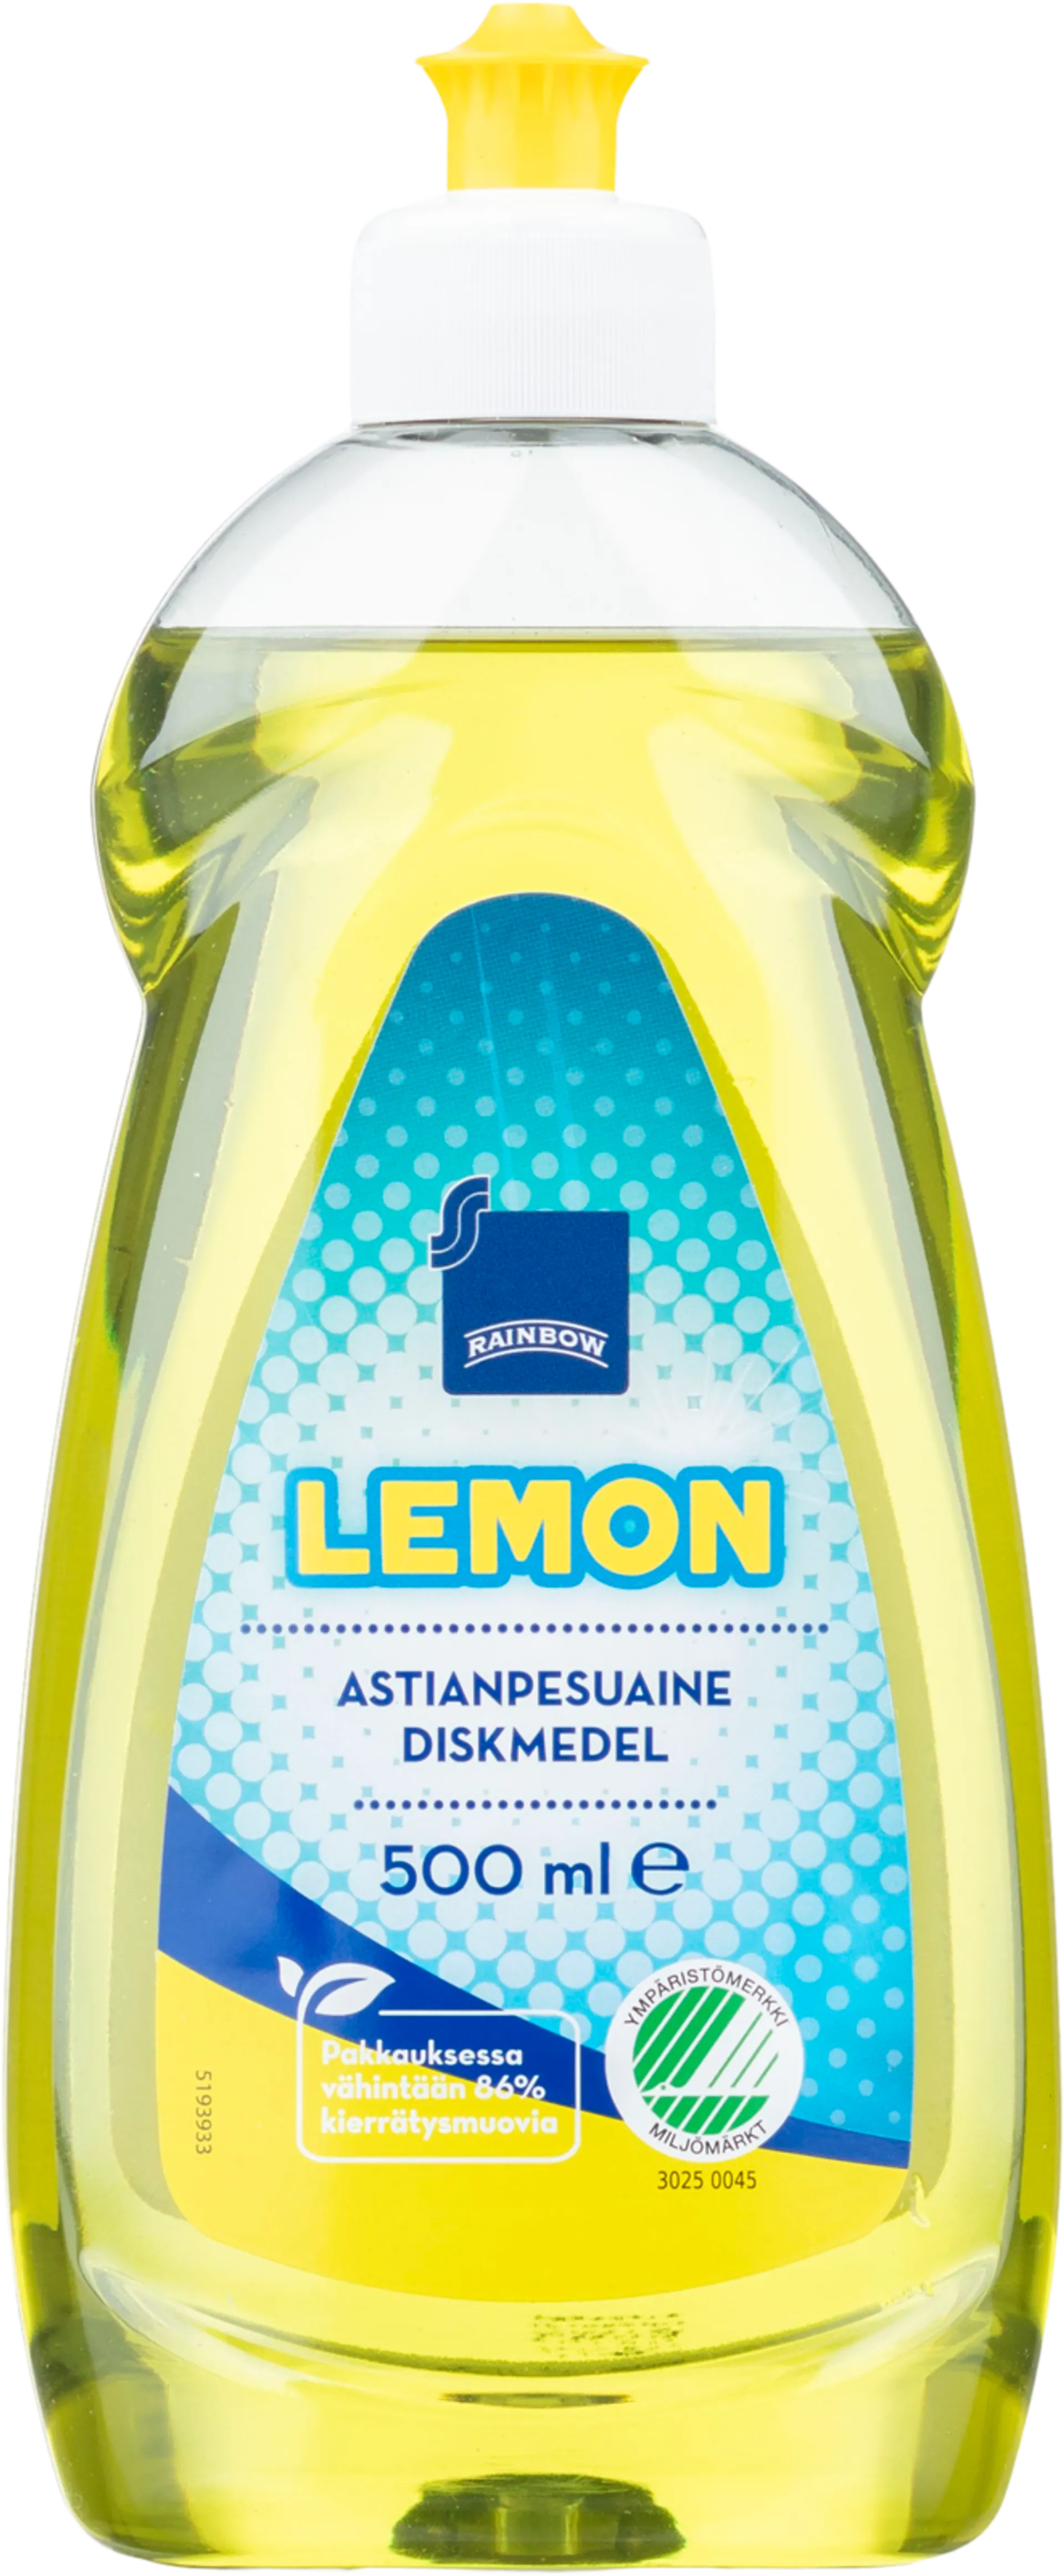 Rainbow Lemon astianpesuaine 500 ml